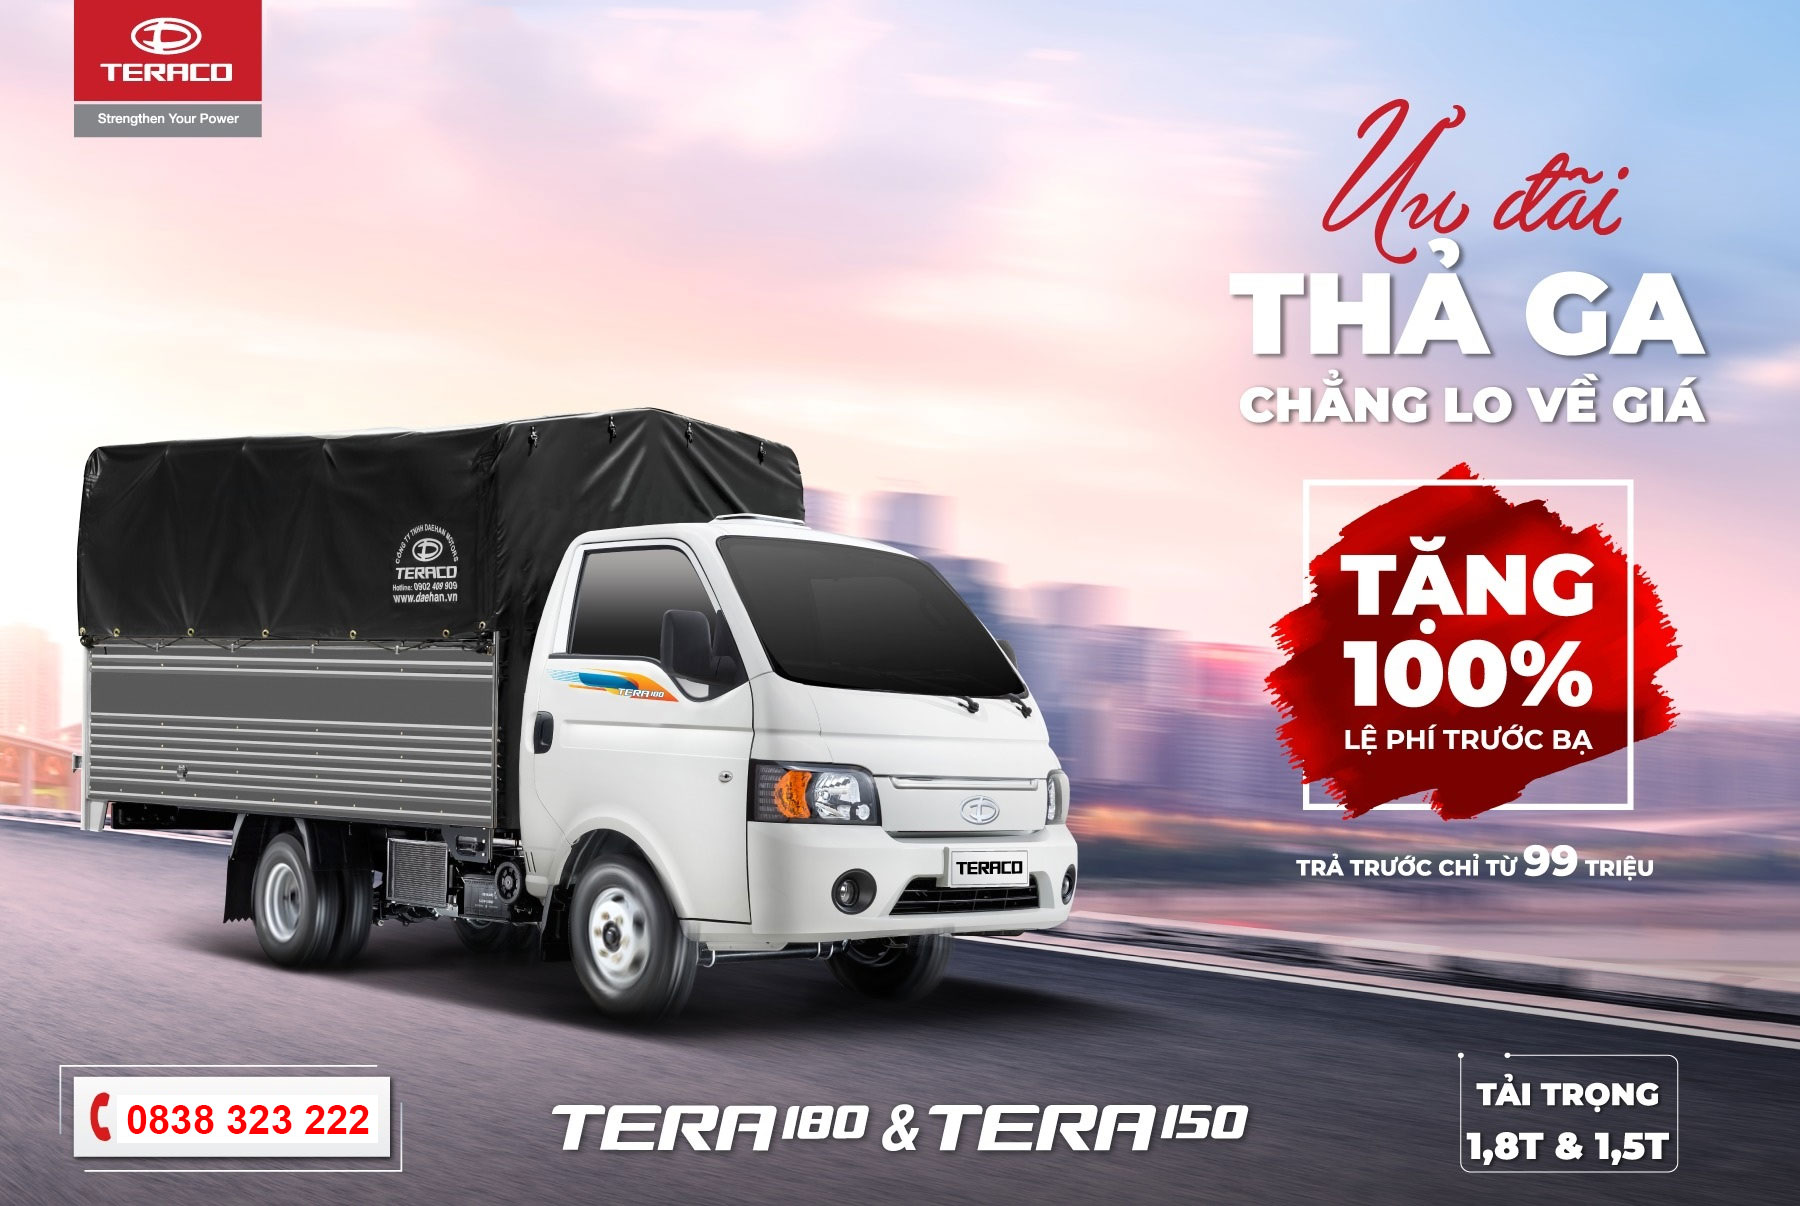 Tháng 8 - Tặng 100% LPTB khi mua xe tải Tera18 & Tera150